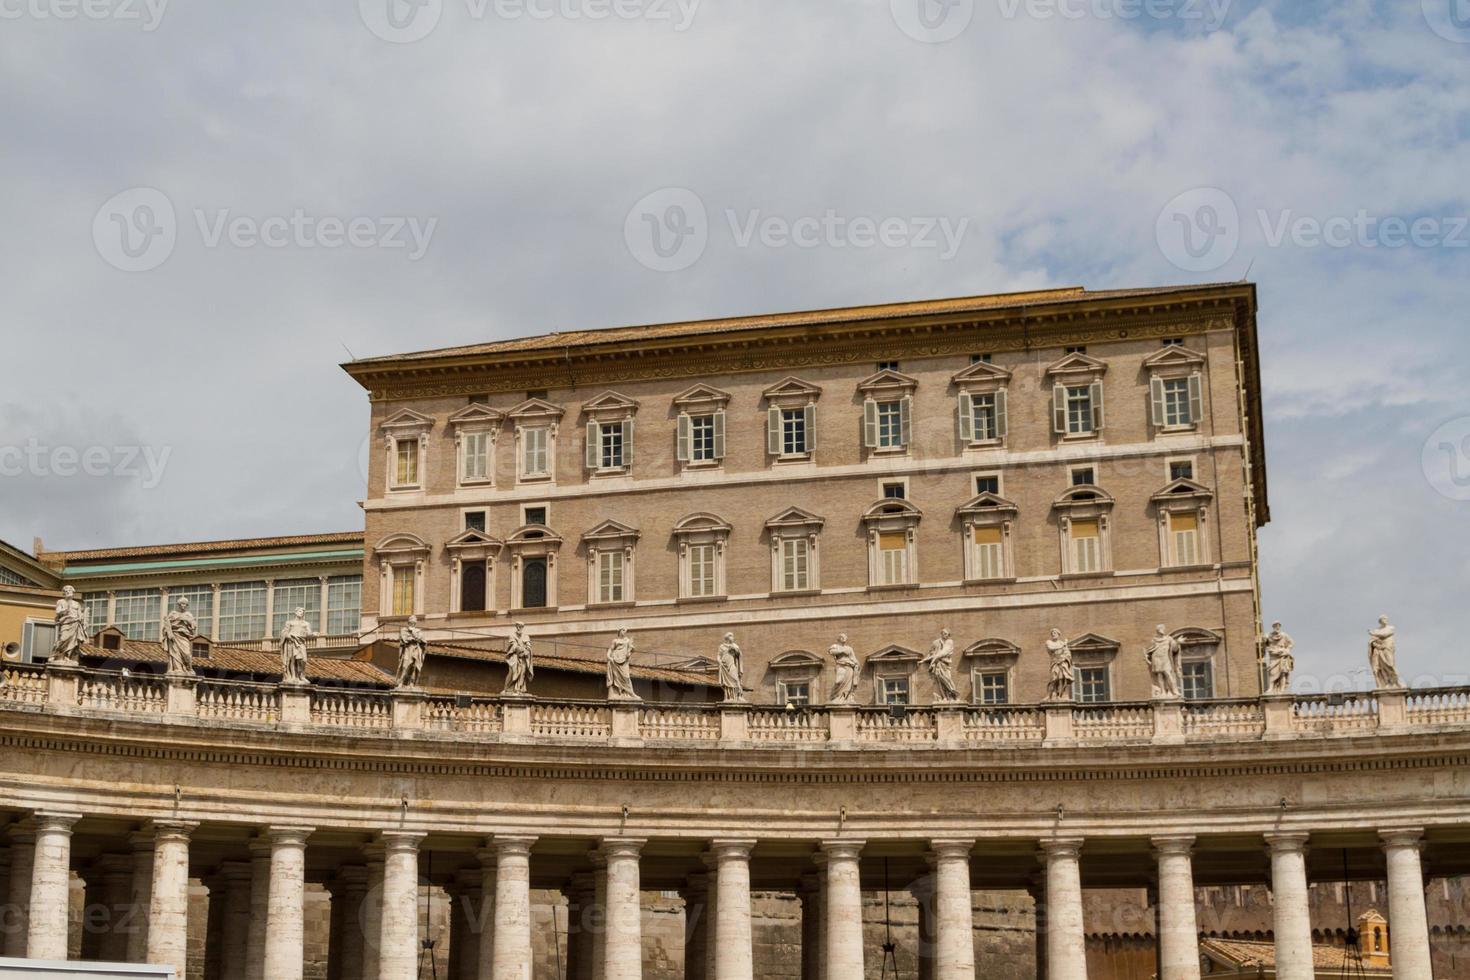 Gebäude im Vatikan, dem Heiligen Stuhl in Rom, Italien. Teil des Petersdoms. foto